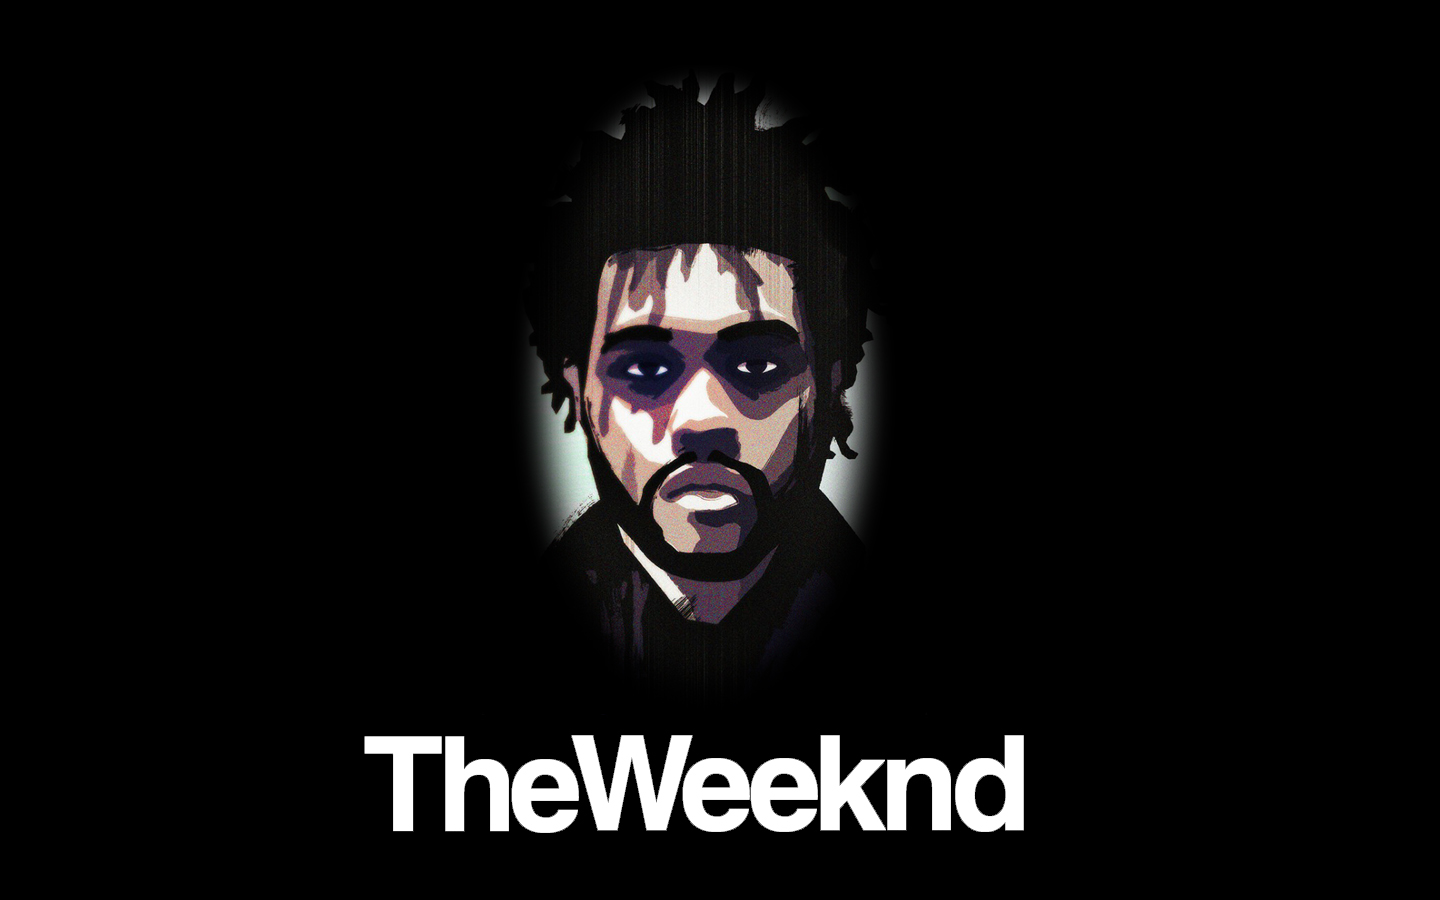 Again the weekend. The Weeknd. The Weeknd надпись. The Weeknd арт. The Weeknd обои на рабочий стол.